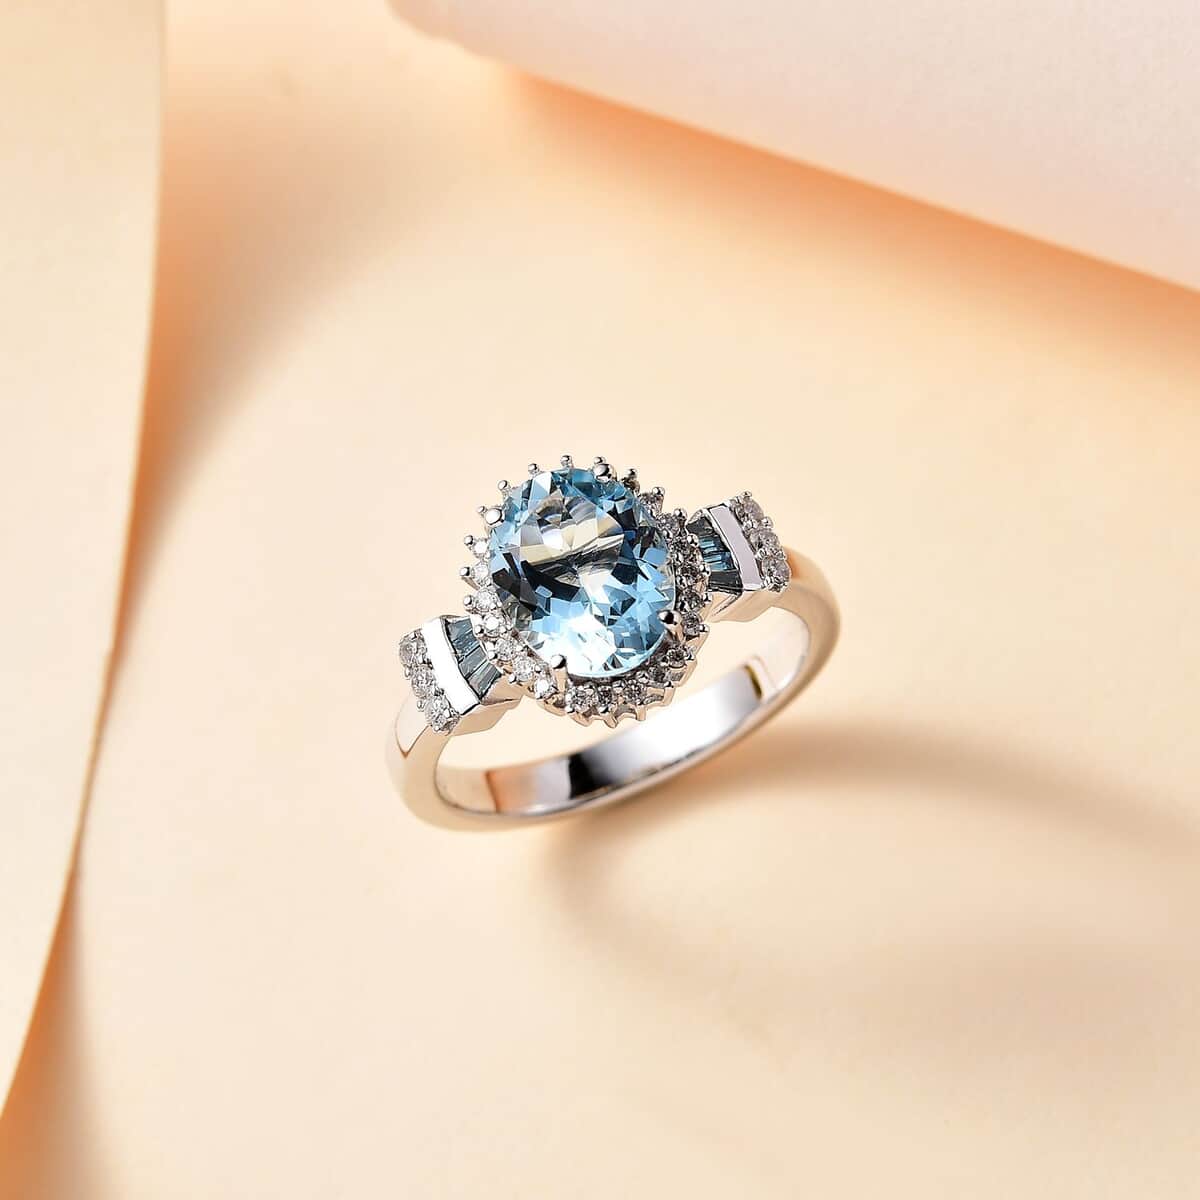 Luxoro 14K White Gold AAA Santa Maria Aquamarine and I2-I3 Venice Blue and White Diamond Ring (Size 8.0) 4.40 Grams 1.85 ctw image number 1